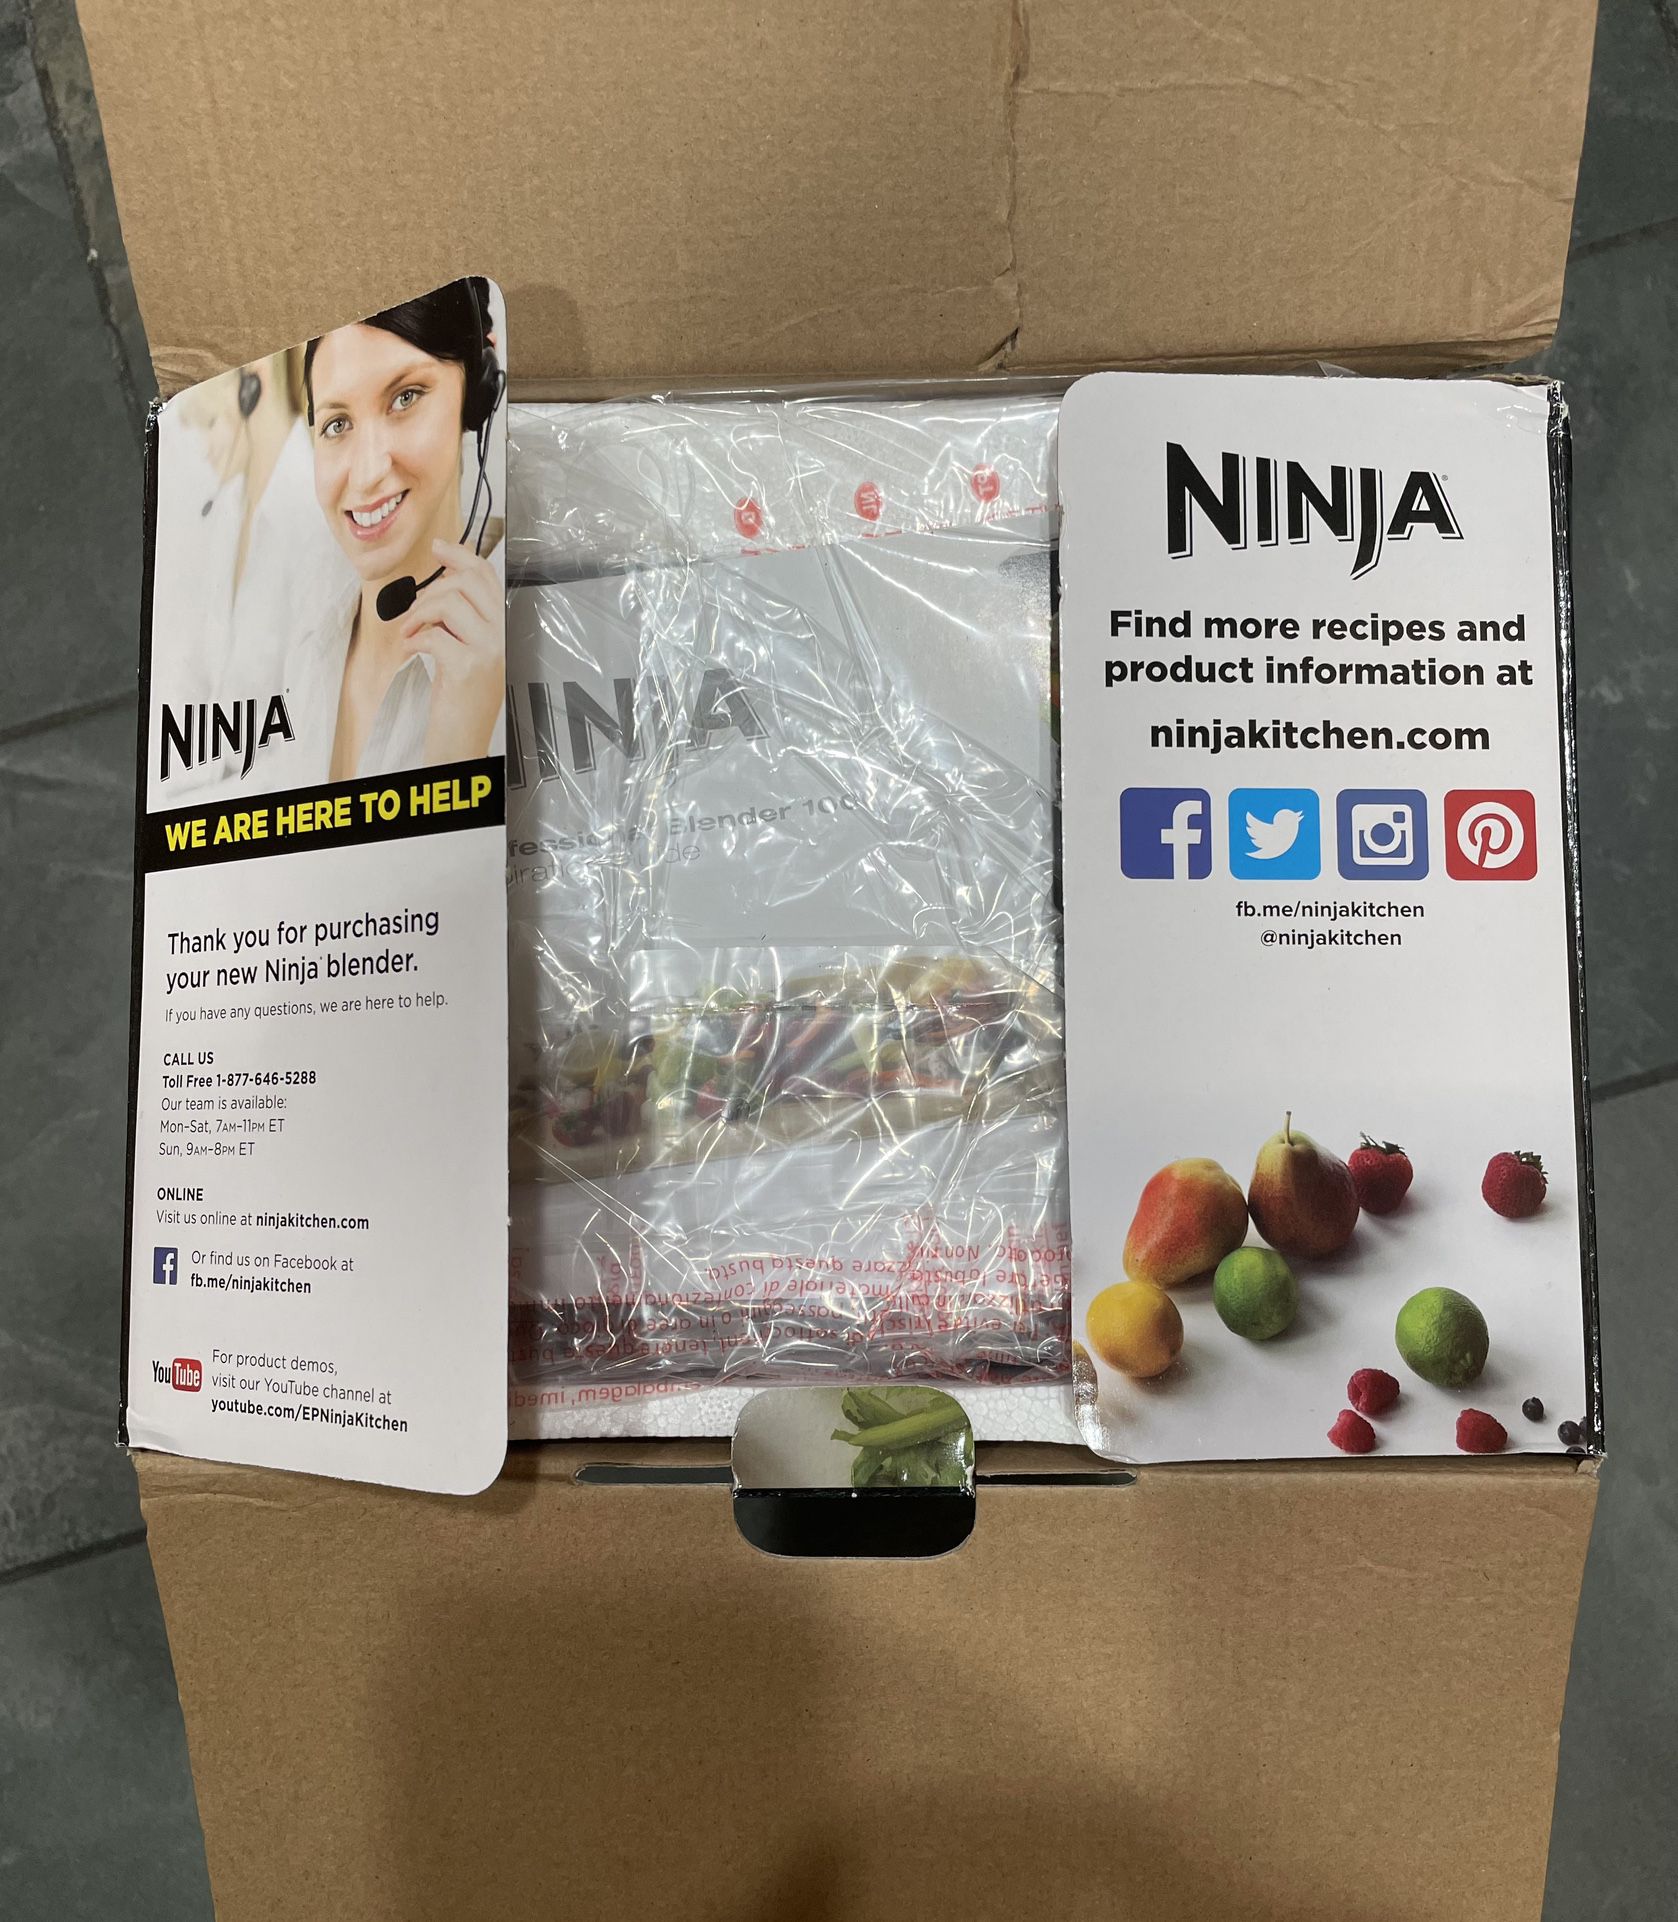 Ninja BL770 Mega Kitchen System, for Sale in Chicago, IL - OfferUp